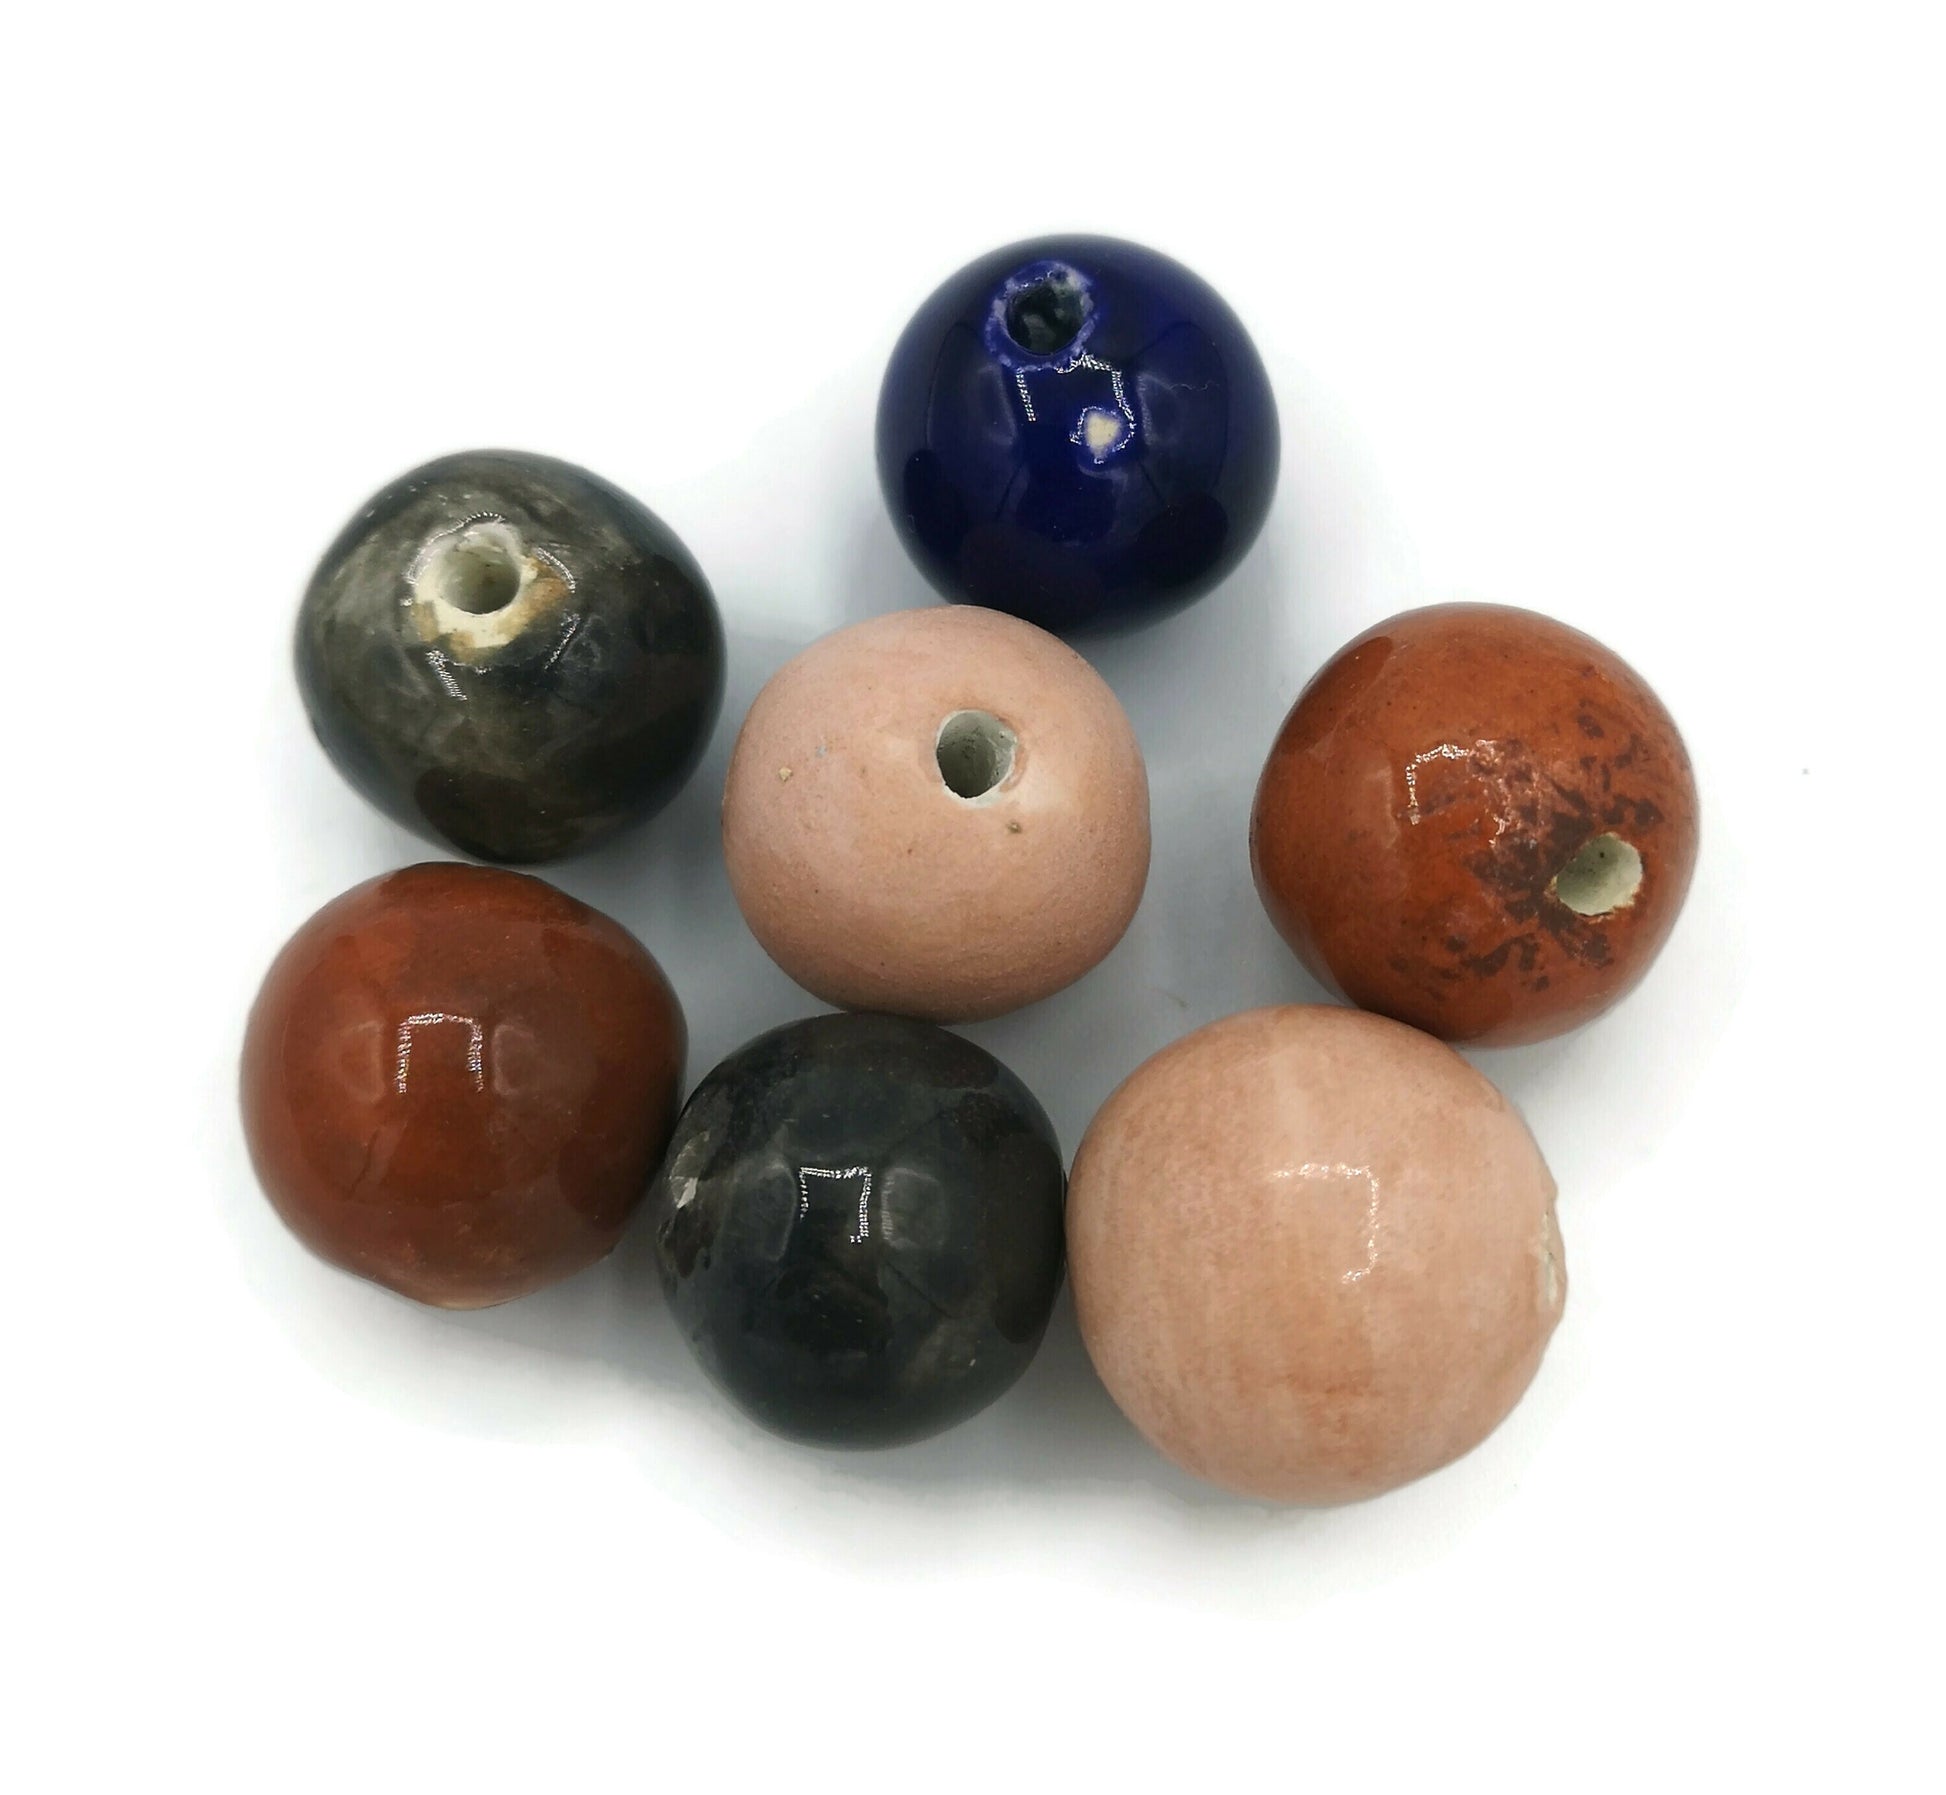 CLAY BEADS, Handmade Ceramic Bubblegum Beads For Jewelry Making, Set Of 7 Mixed Craft Beads Decorative Round Colorful Beads - Ceramica Ana Rafael